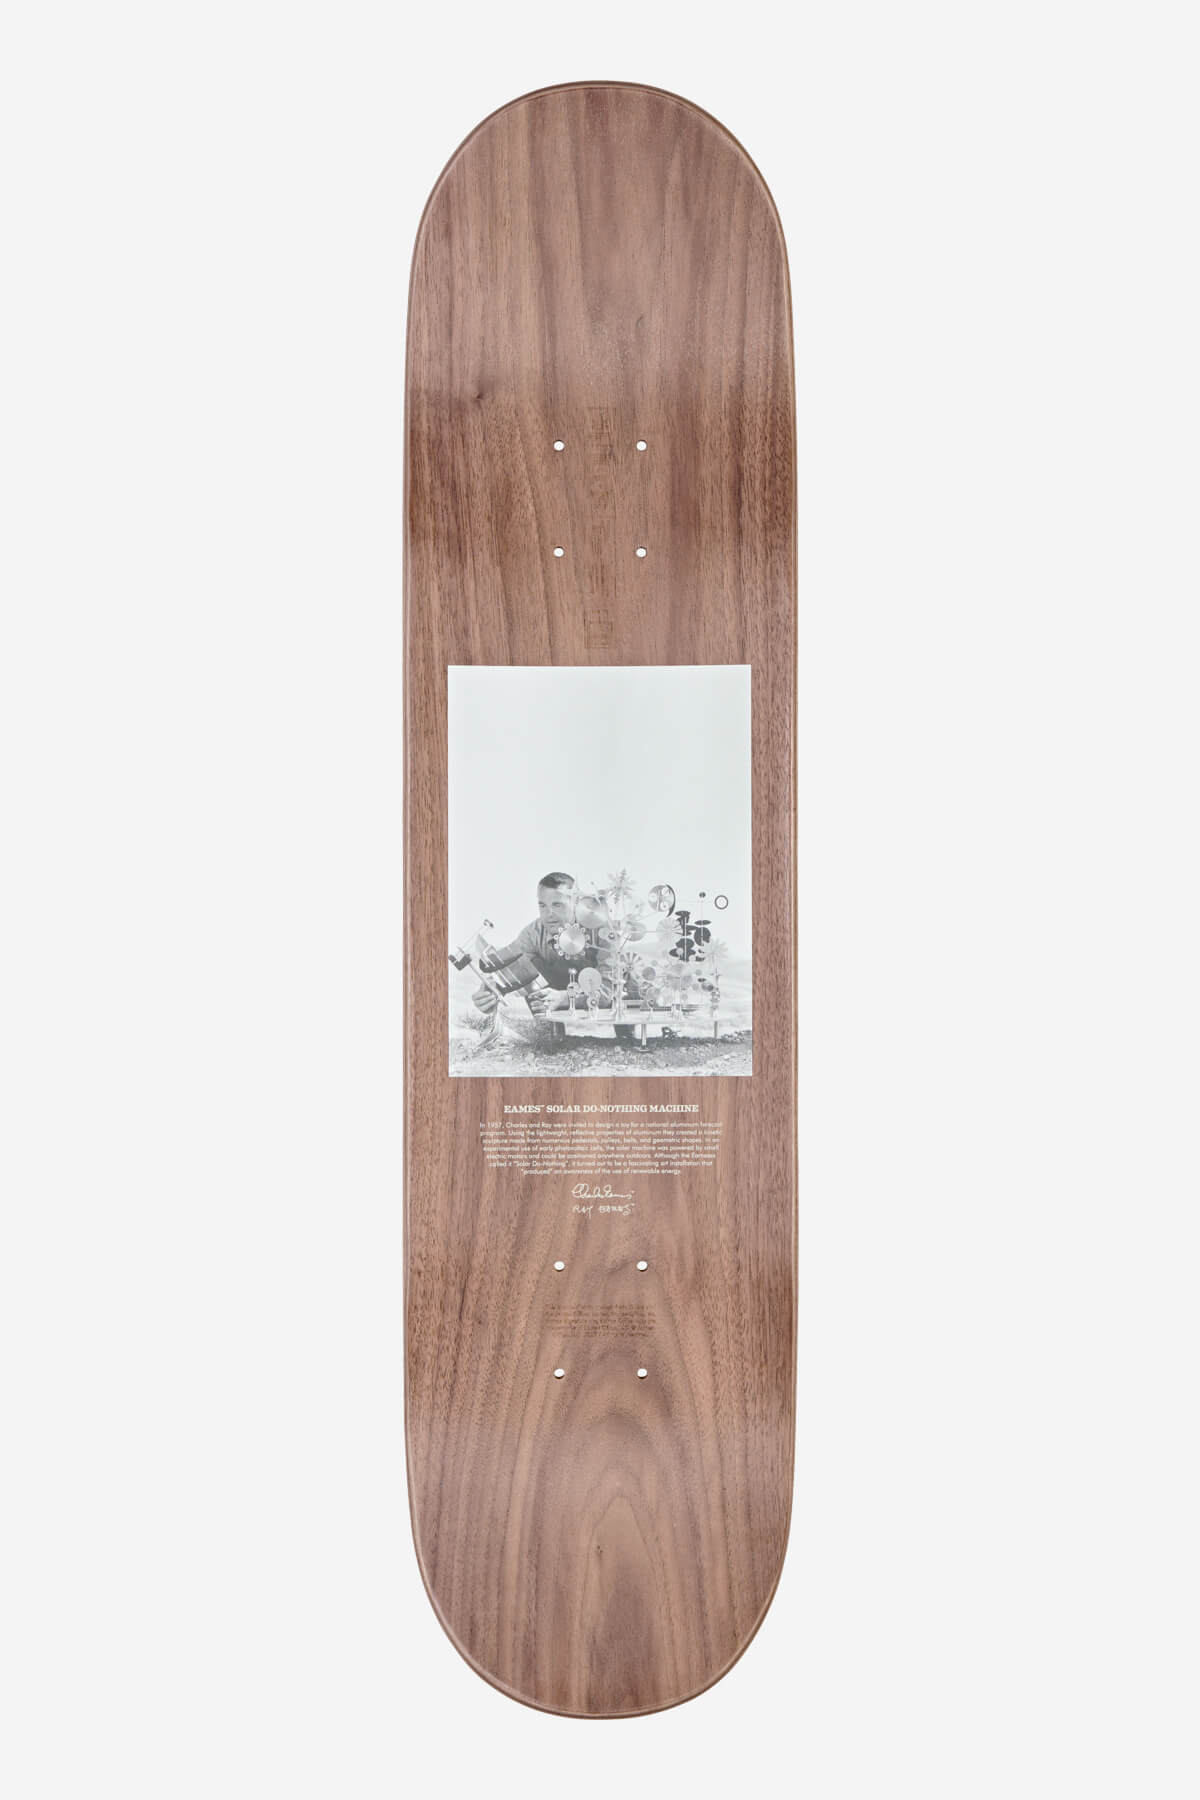 Globe - Eames Silhouette - Solar Do Nothing - 7.75" Skateboard Deck